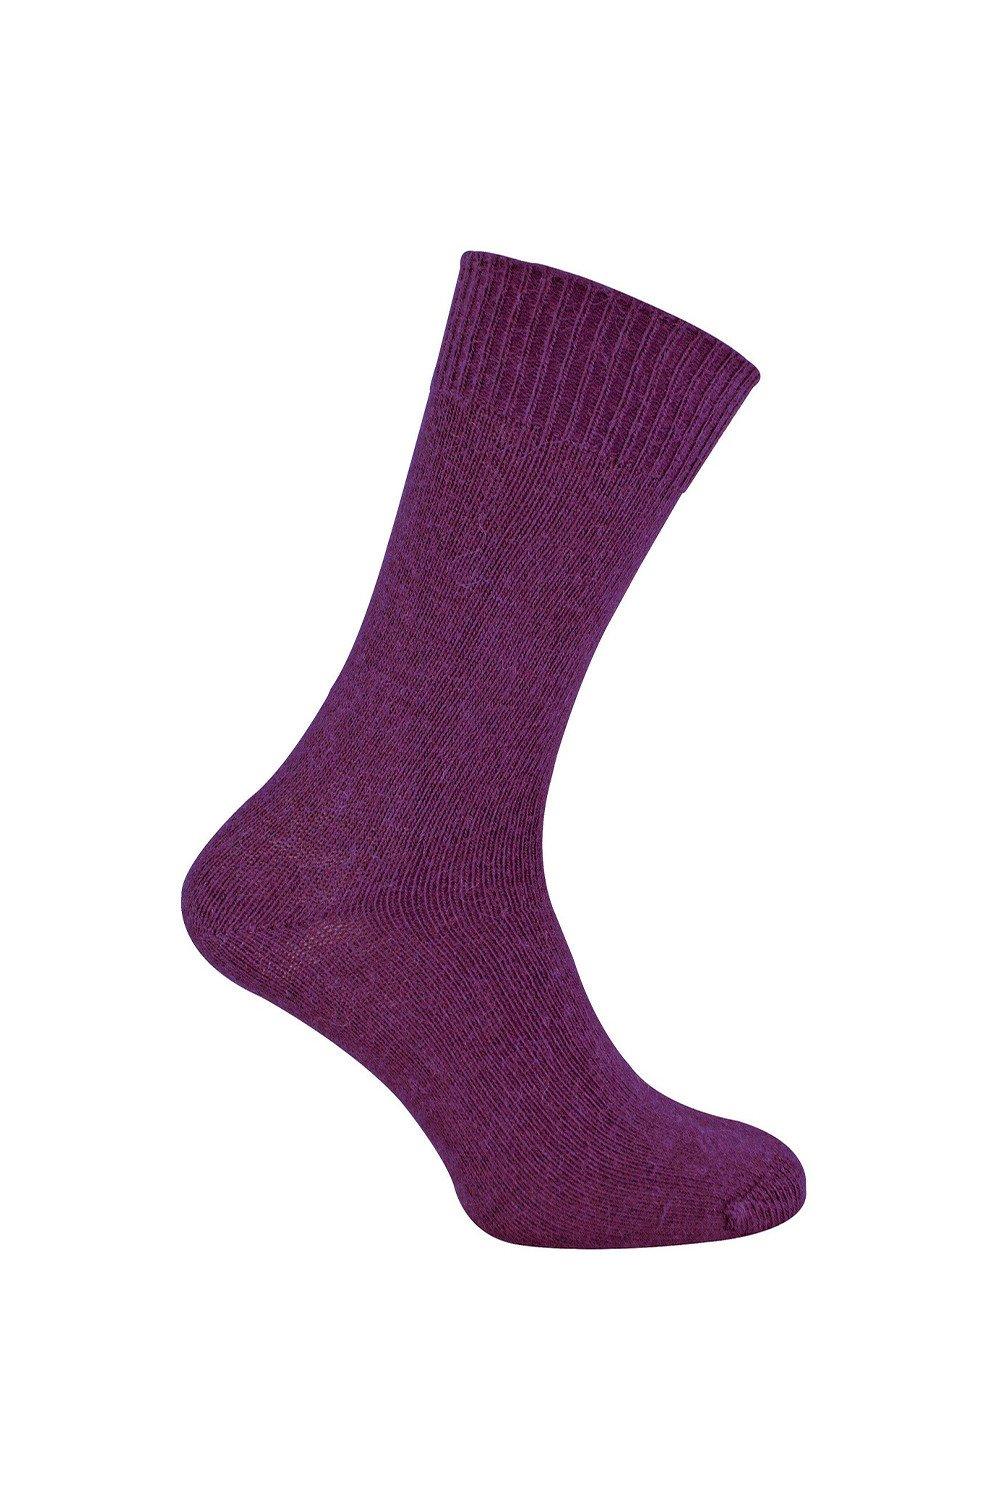 Thick Warm Lightweight Luxury Alpaca Wool Socks for Winter